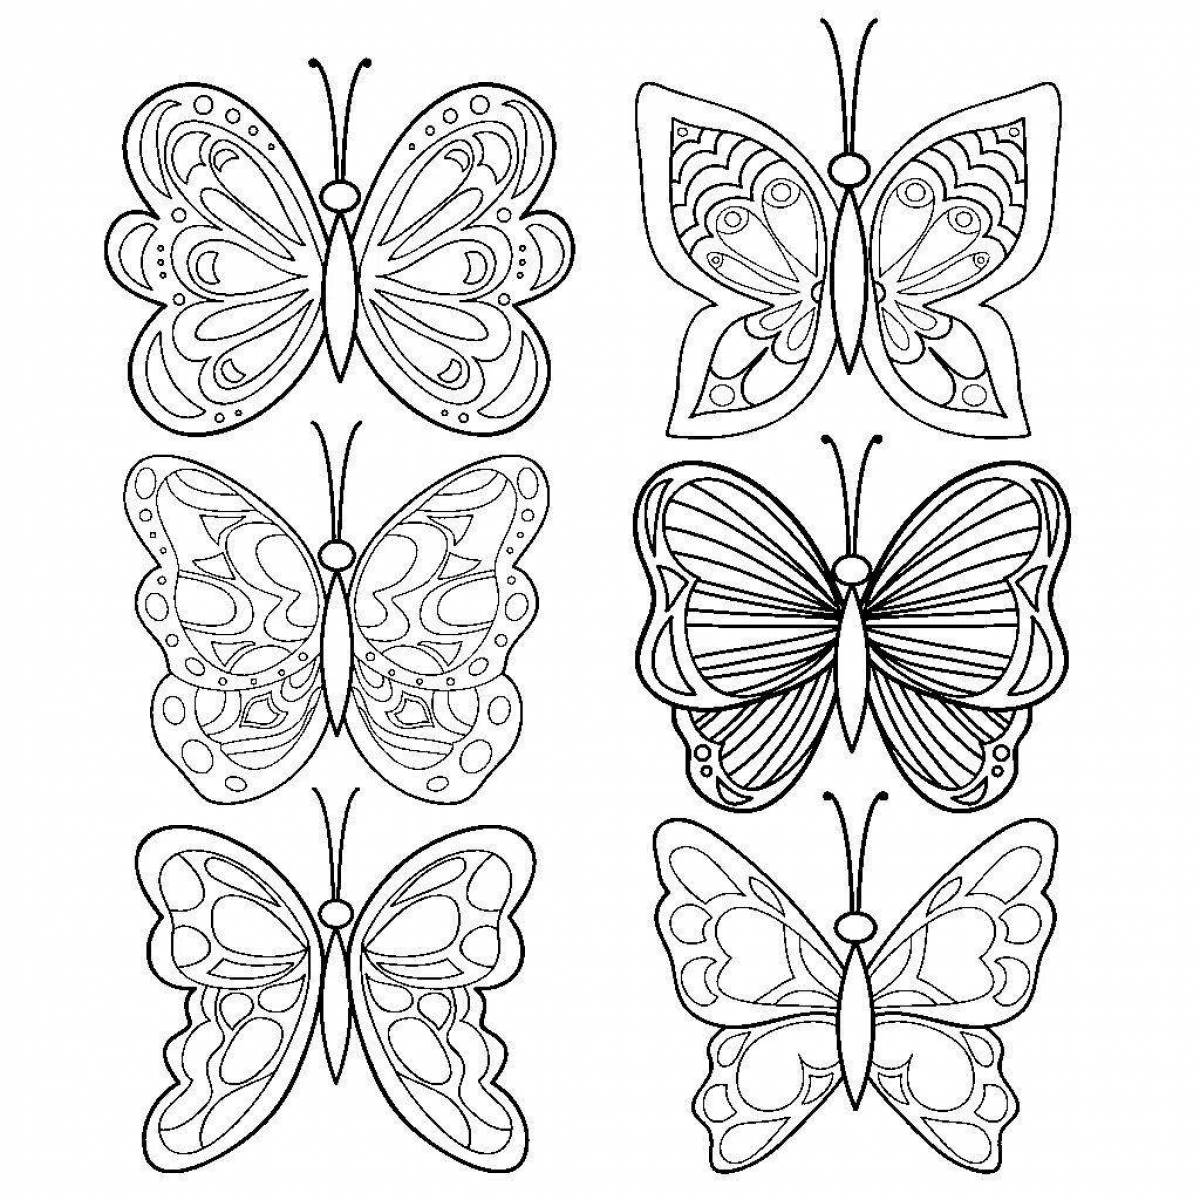 Lots of shiny butterflies on one sheet